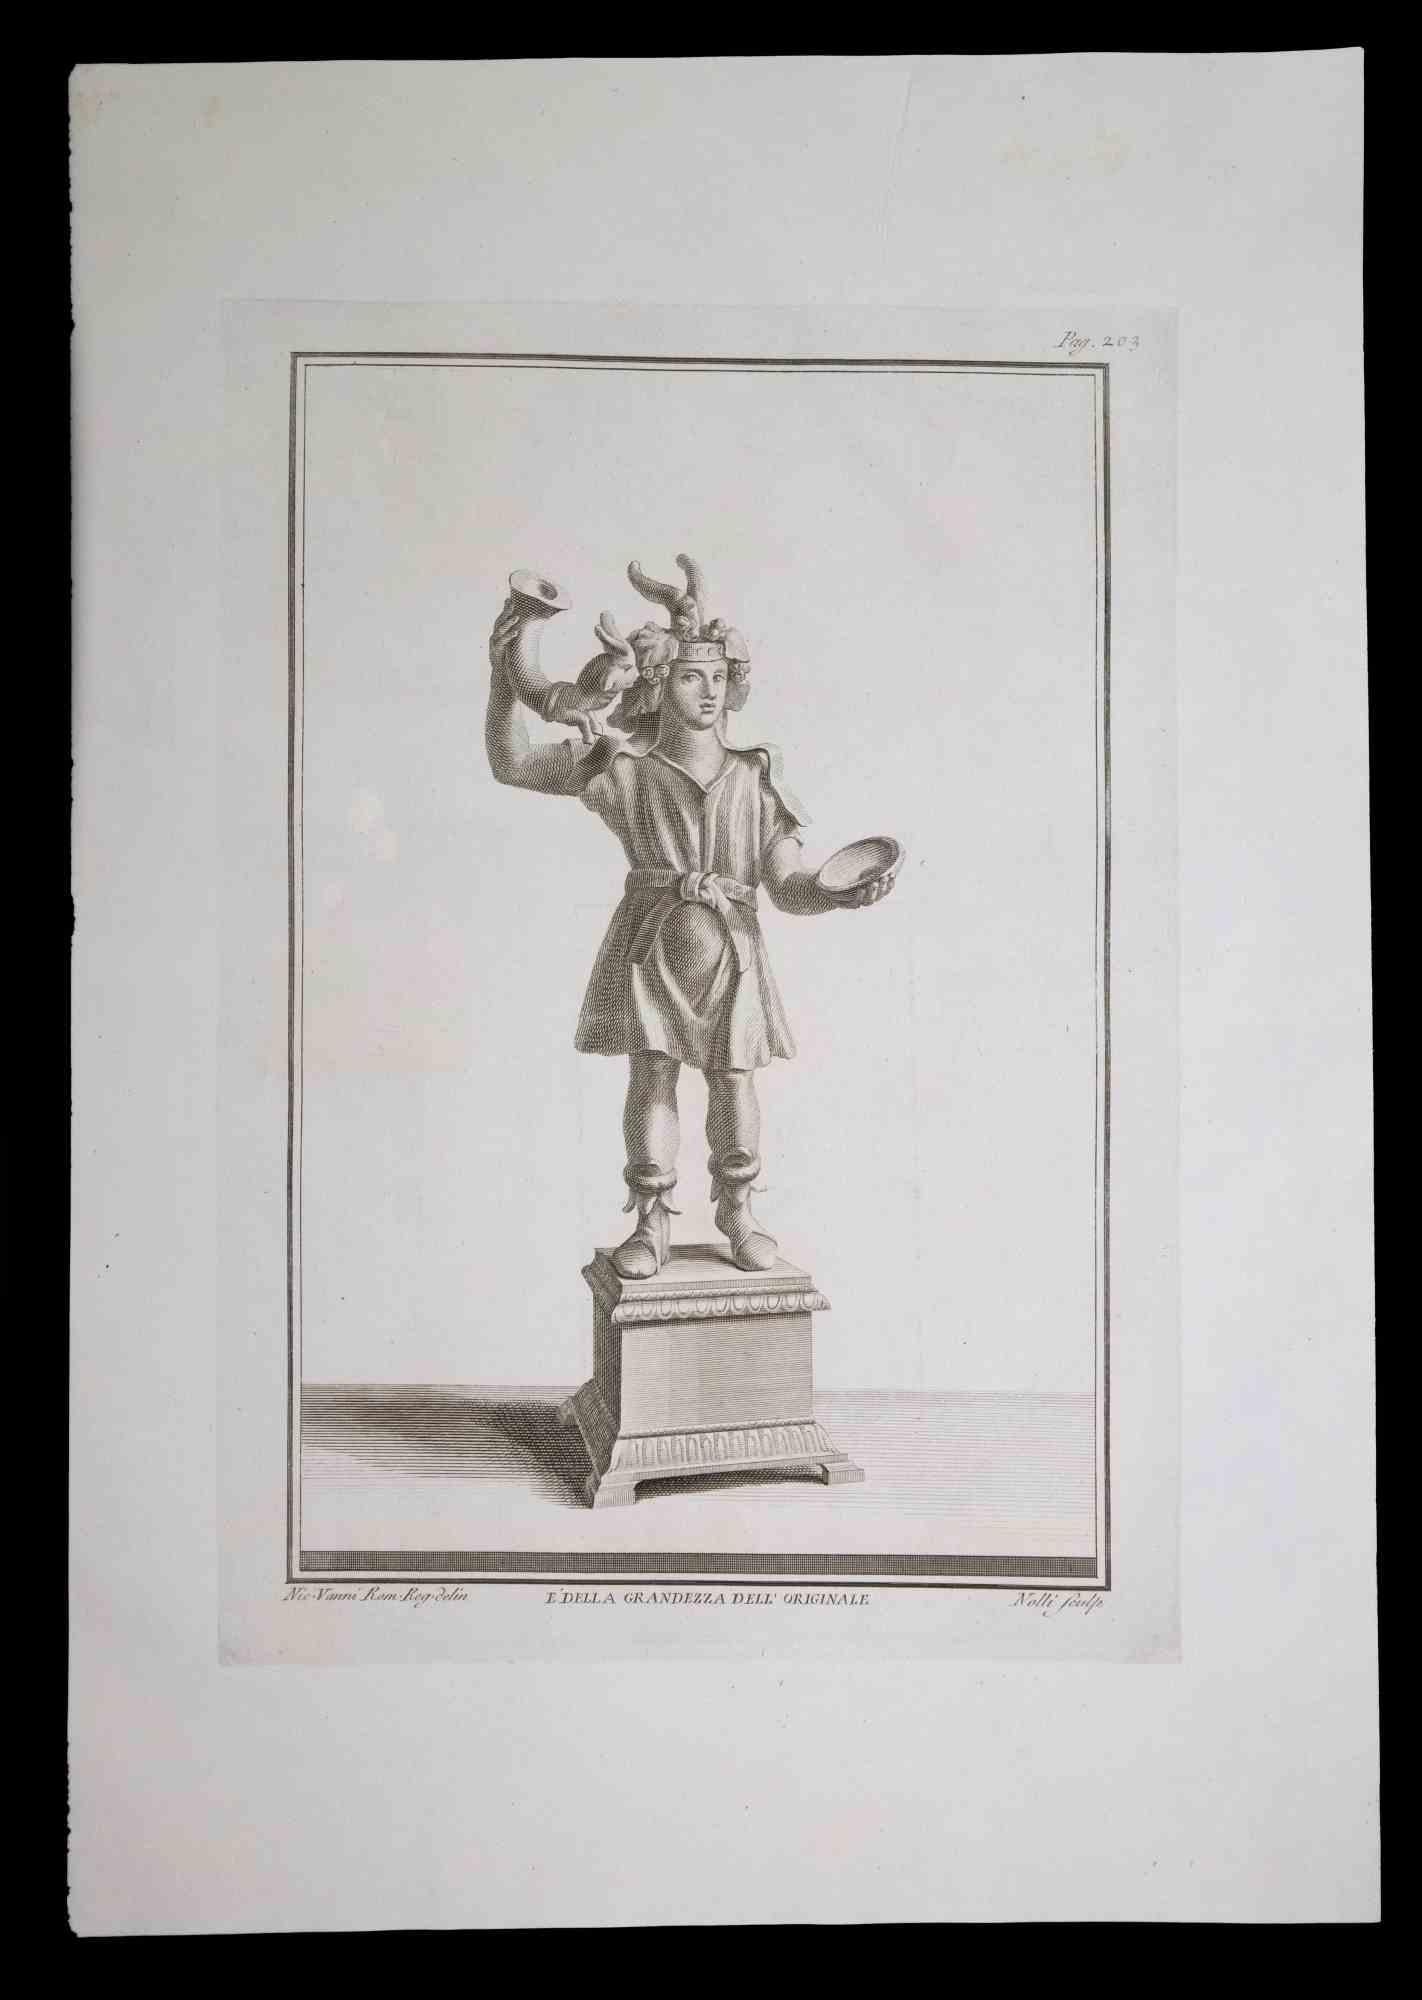 Carlo Nolli Figurative Print - Ancient Roman Statue - Etching by C. Nolli - 18th century